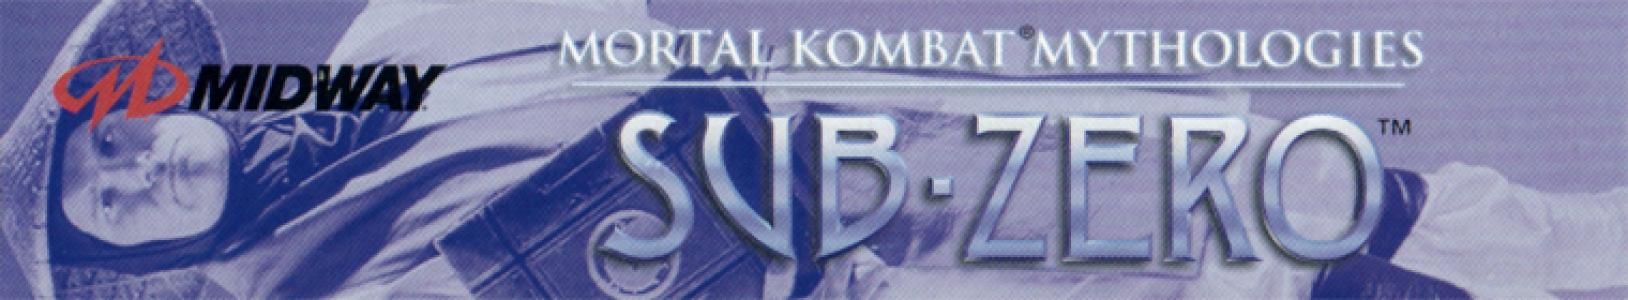 Mortal Kombat Mythologies: Sub-Zero banner